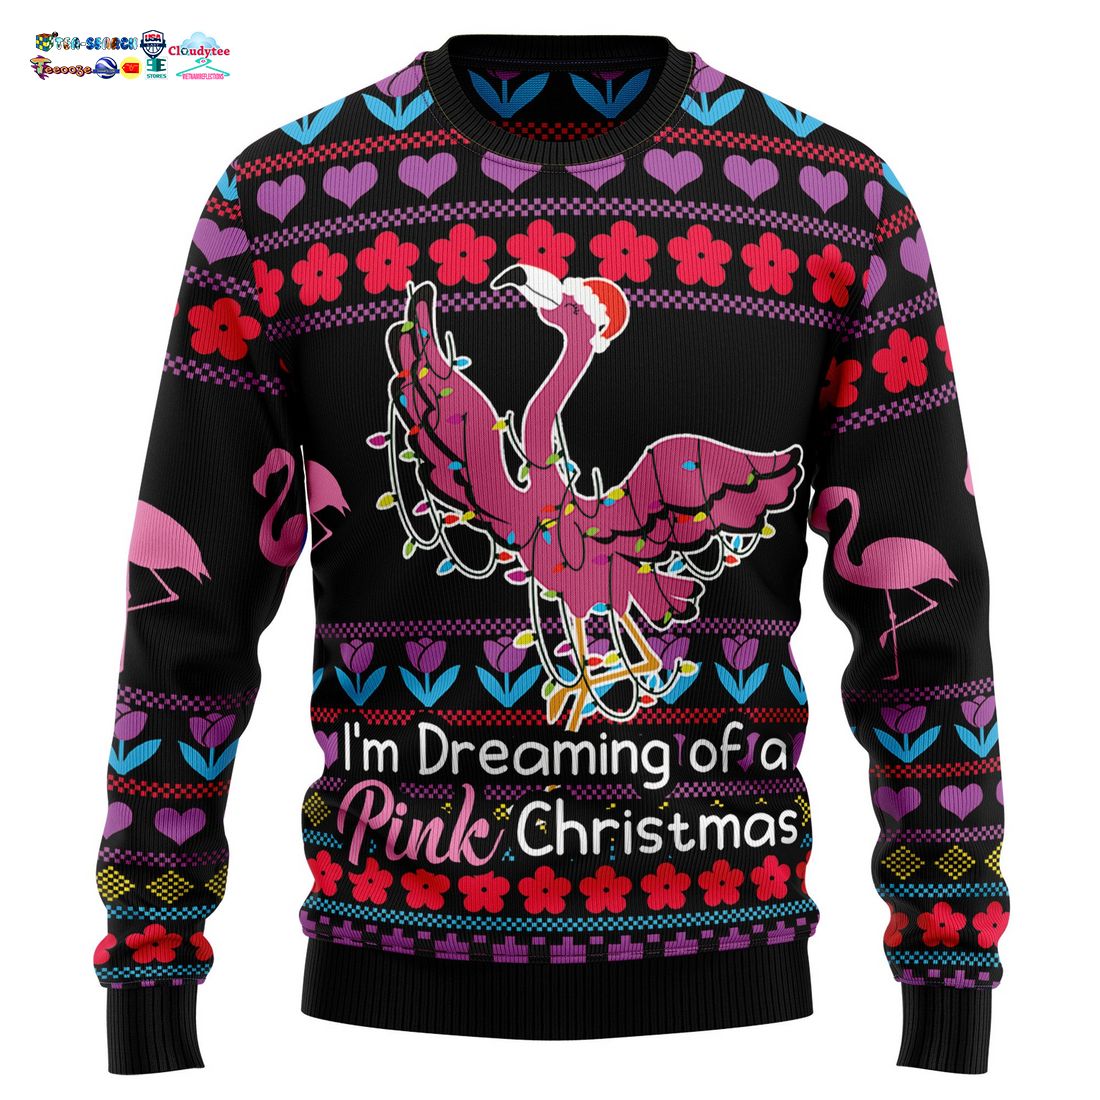 flamingo-im-dreaming-of-a-pink-christmas-ugly-christmas-sweater-1-8vmGP.jpg